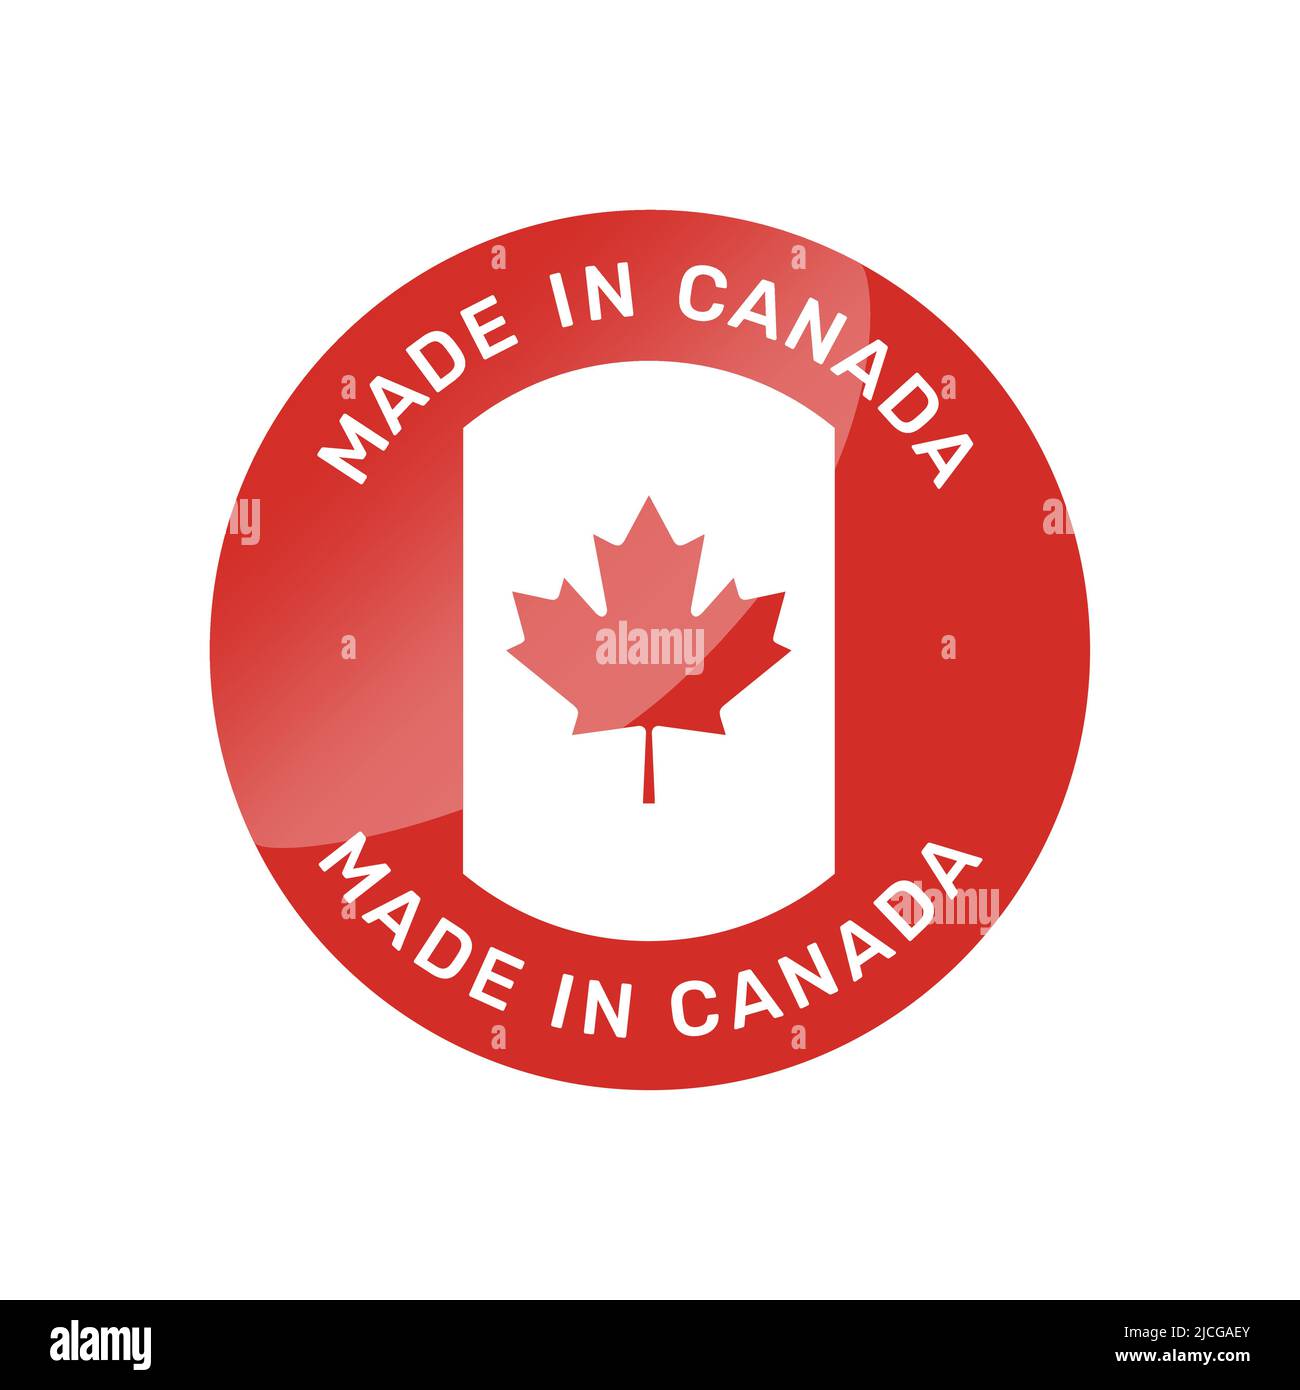 Canadian badge icon Stock-Vektorgrafiken kaufen - Alamy